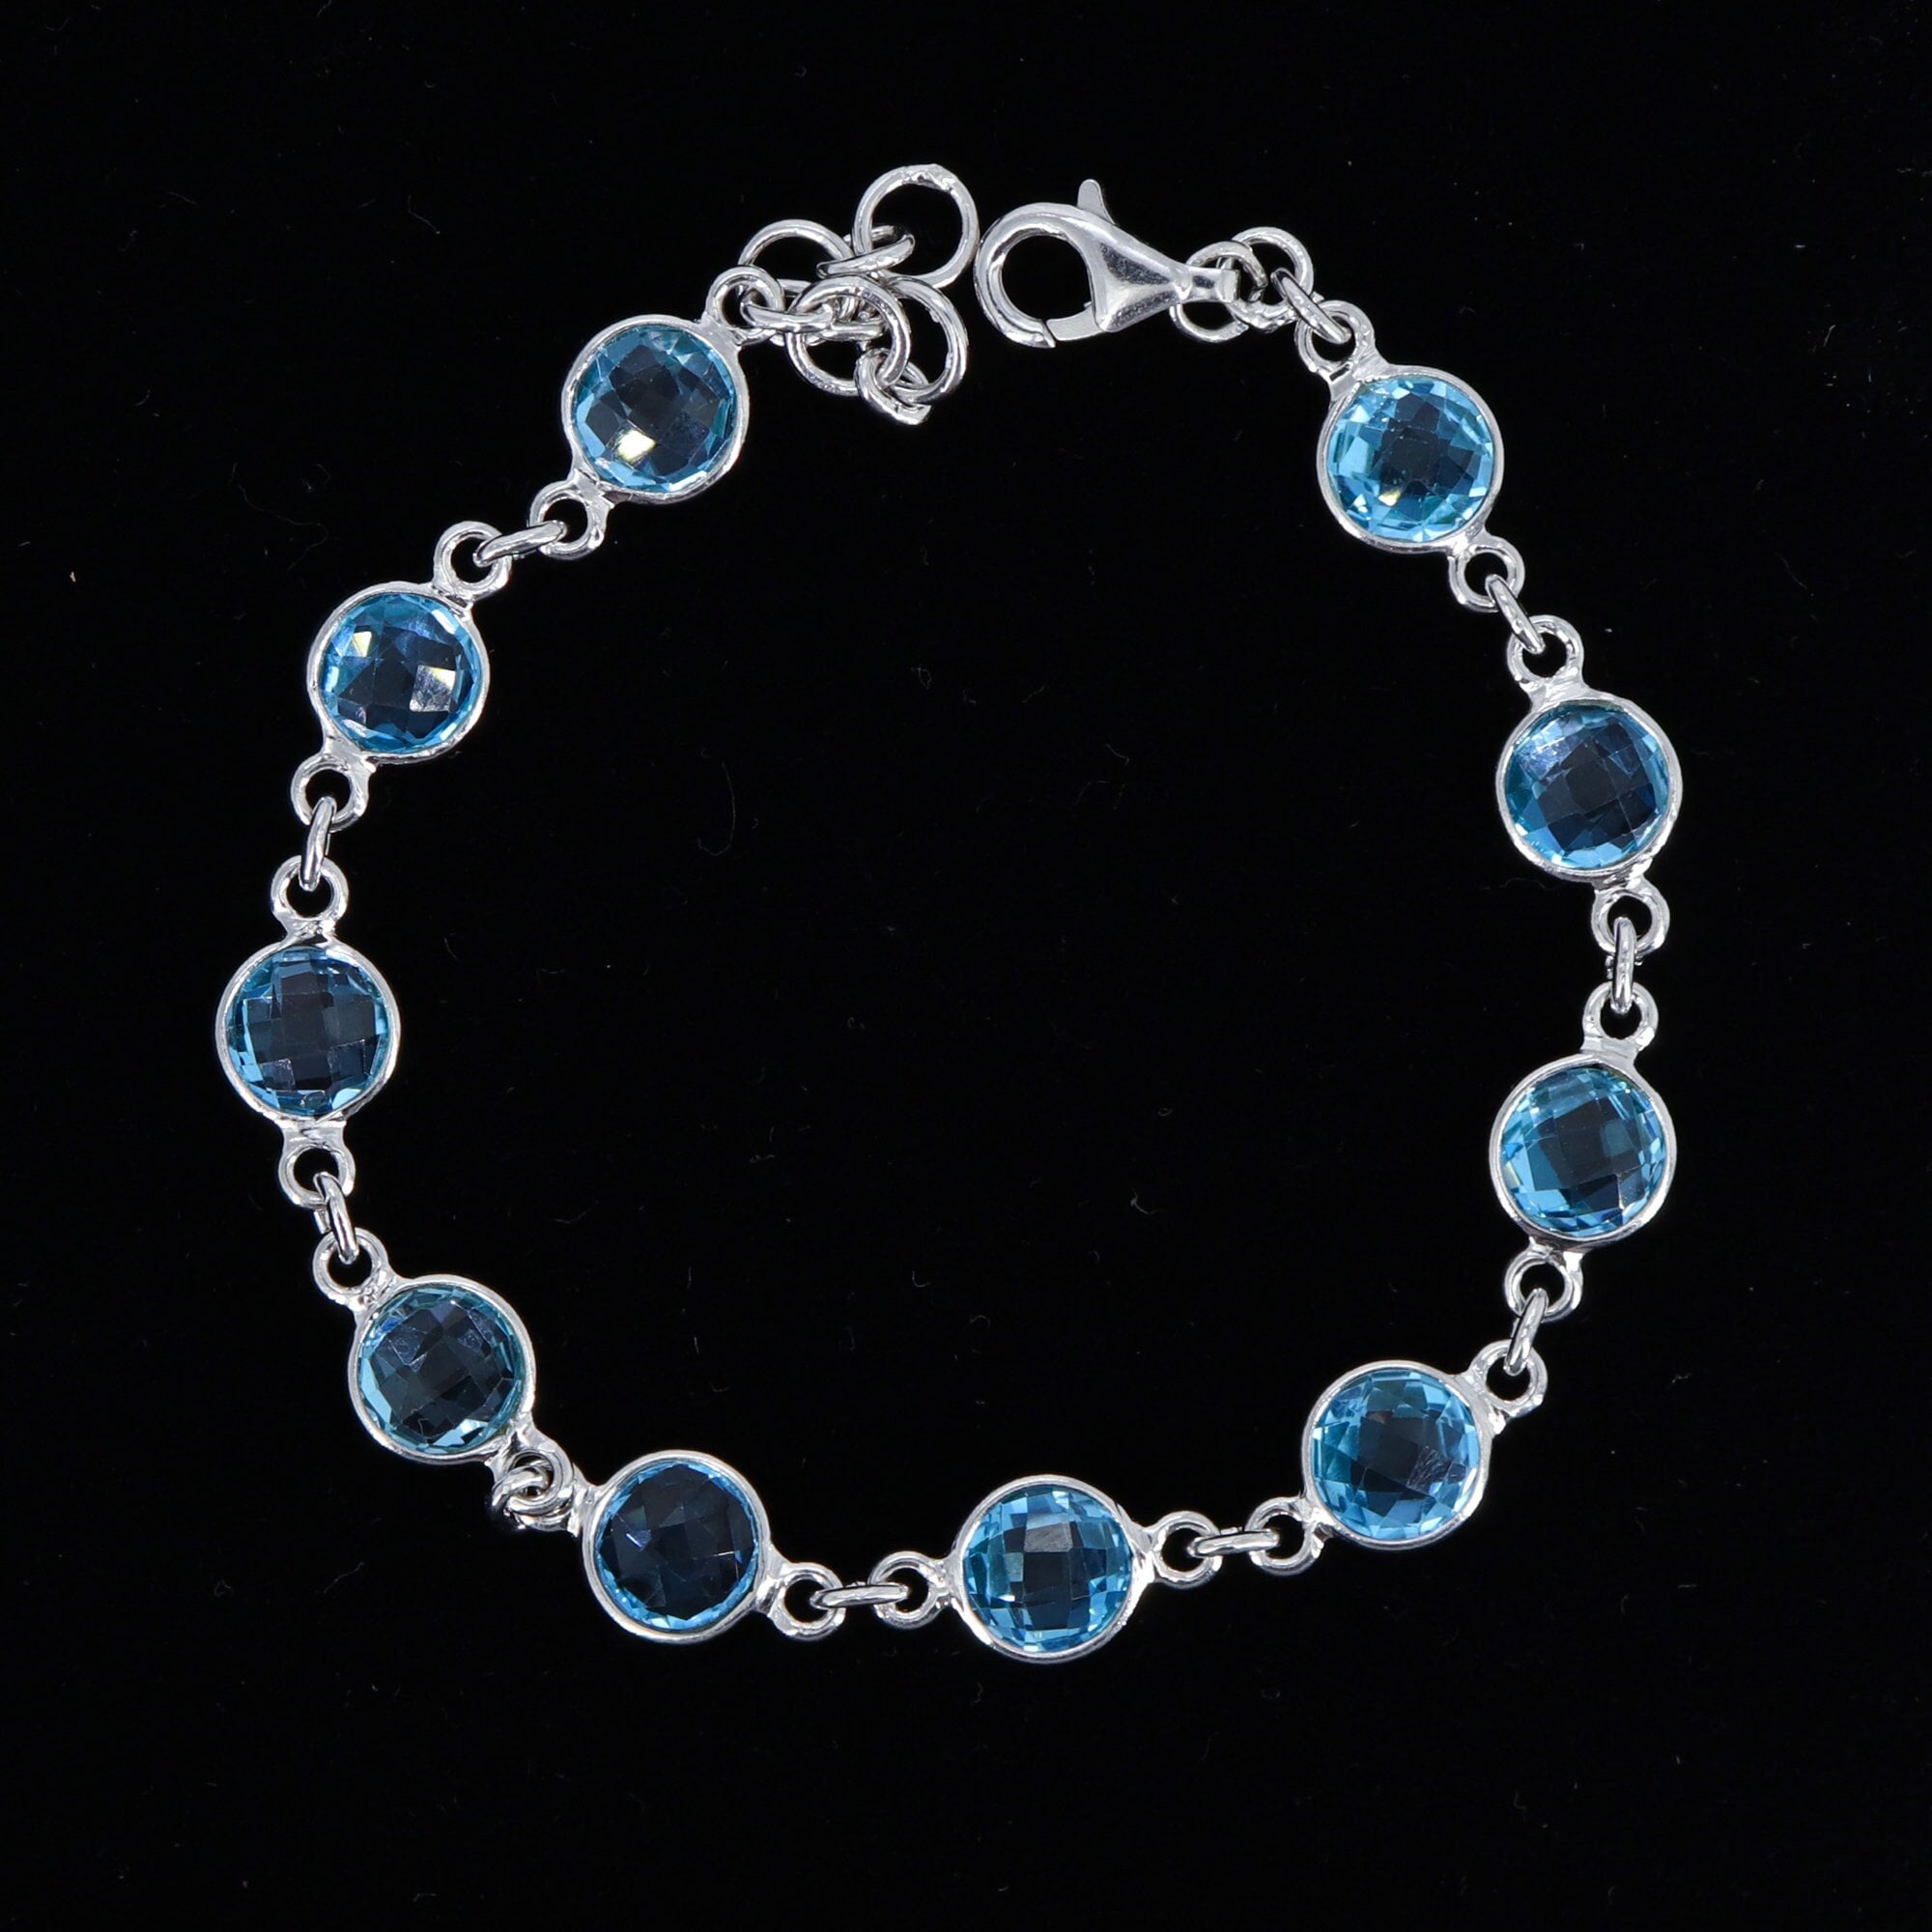 Blue Topaz Bracelet in Sterling Silver - 7.25